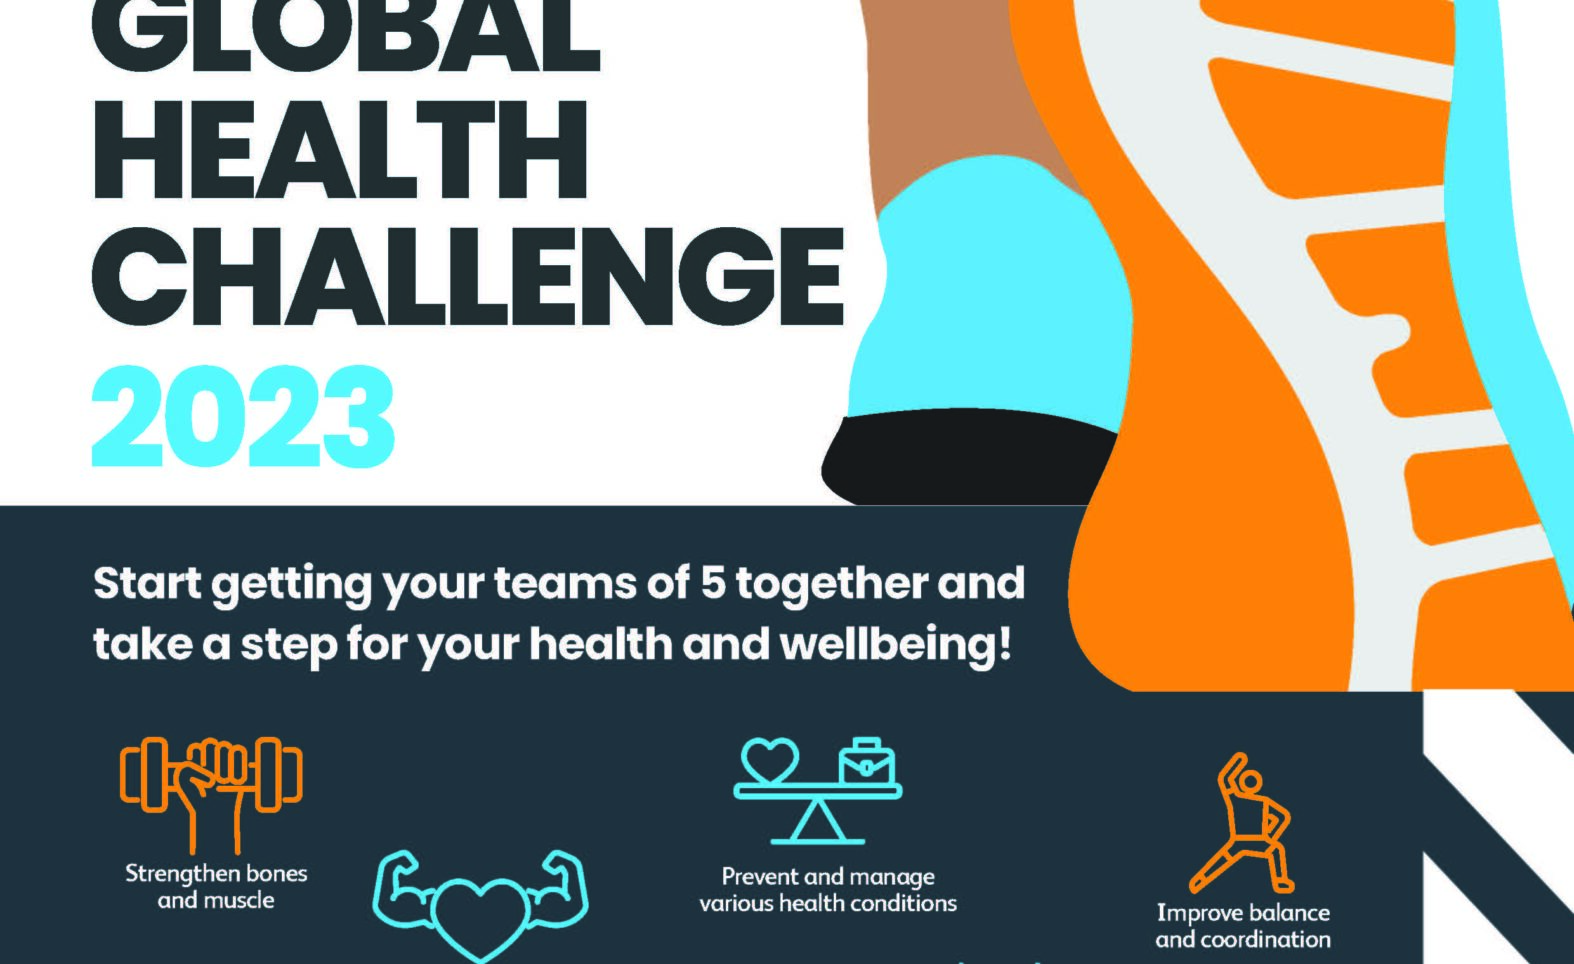 Meet the Health Challenge Winners!